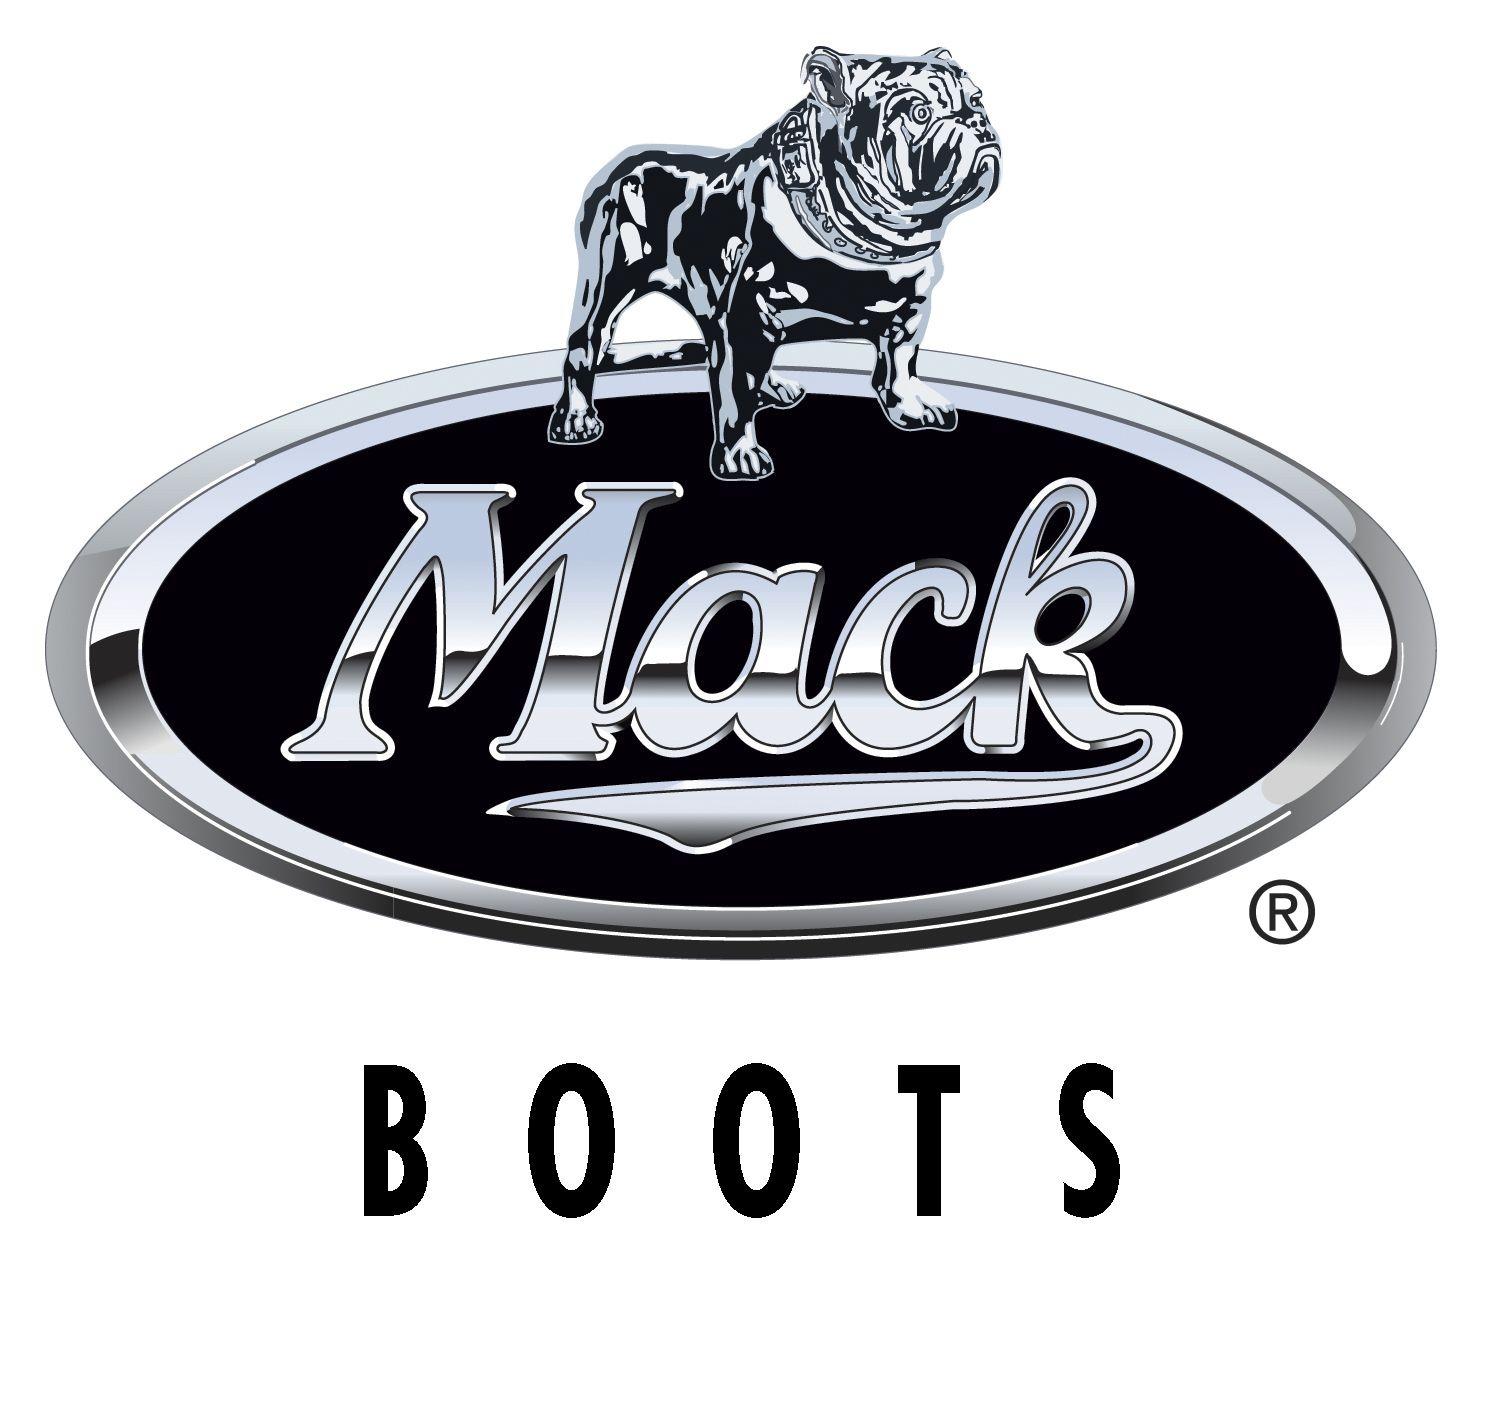 Mack Truck Bulldog Logo - Image - Mack Full Colour Logo BOOTS.jpg | Global TV (Indonesia) Wiki ...